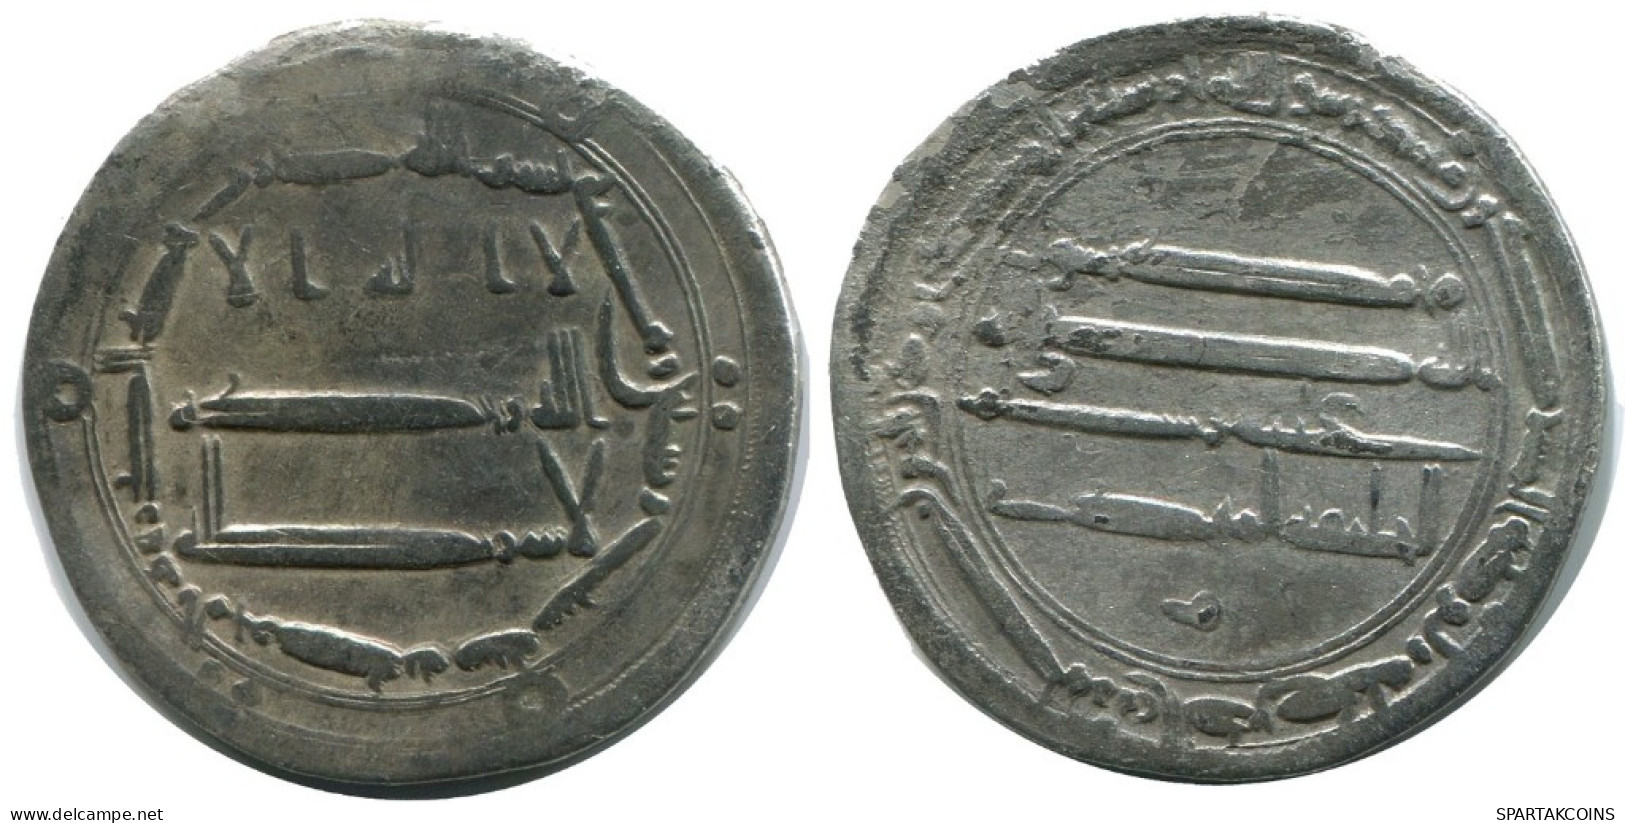 UMAYYAD CALIPHATE Silver DIRHAM Medieval Islamic Coin #AH168.45.D.A - Oriental